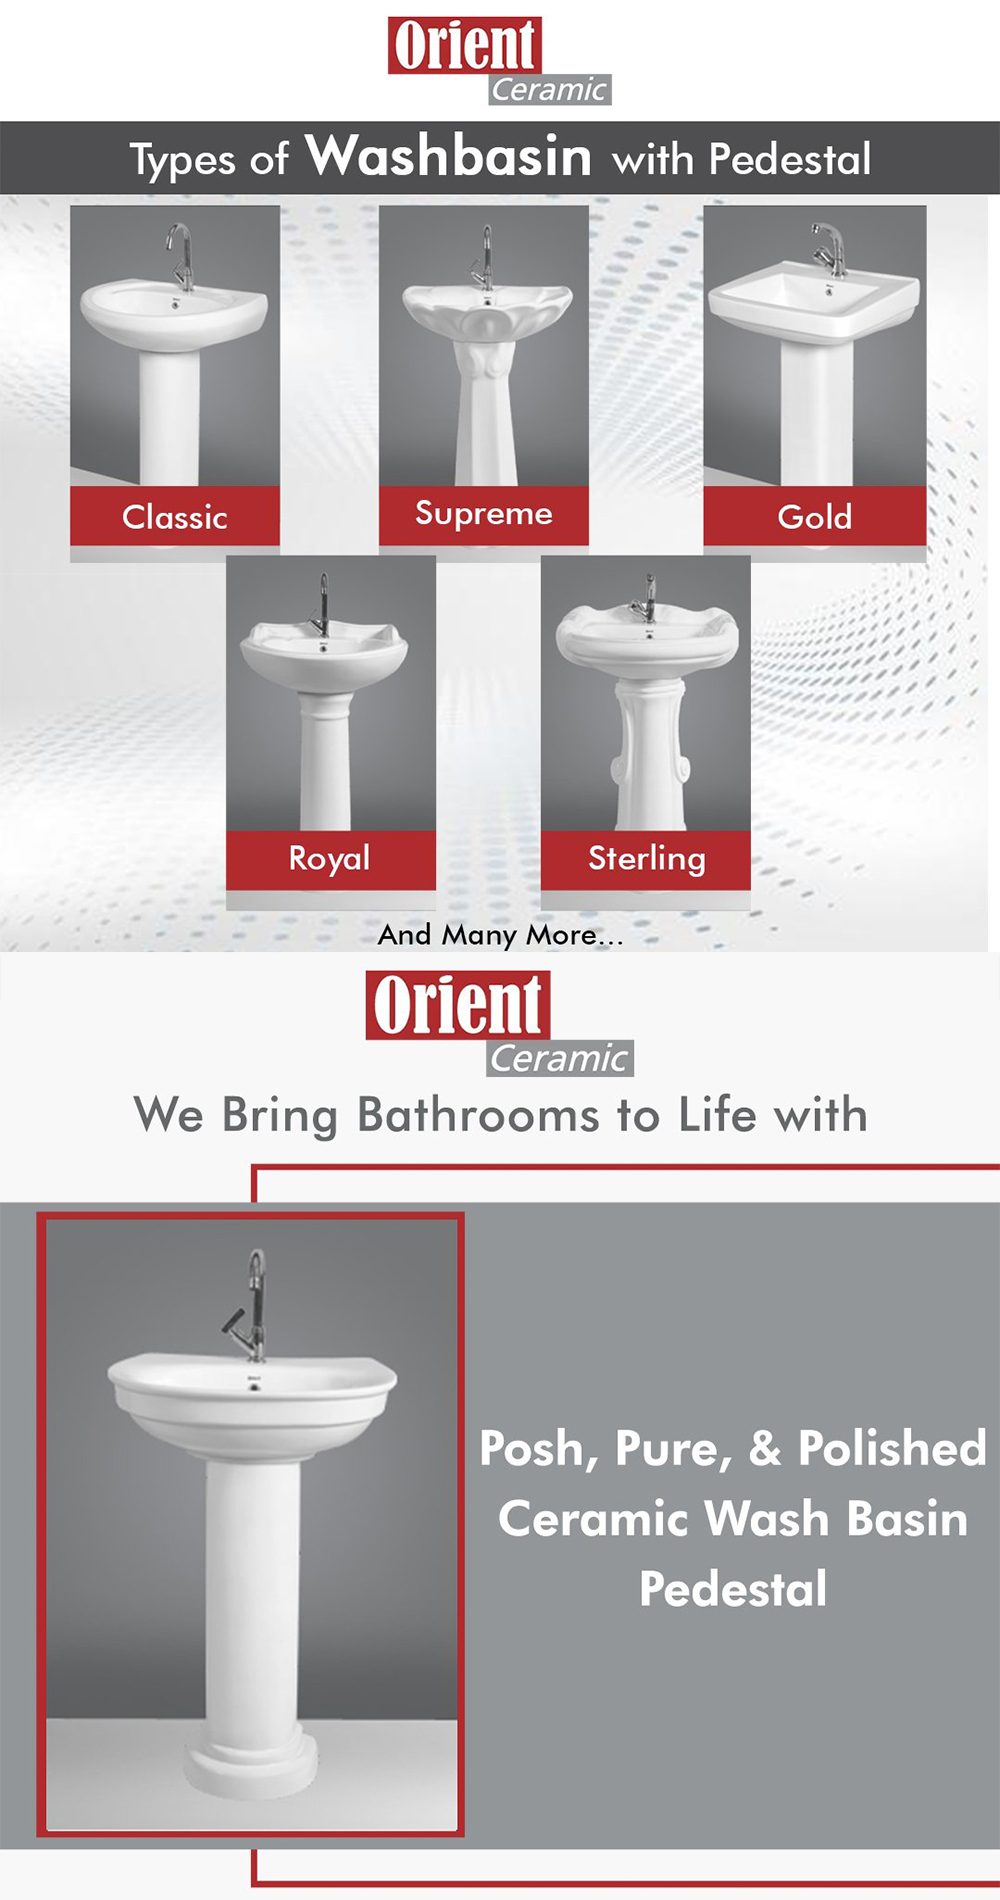 Types of Wash Basin